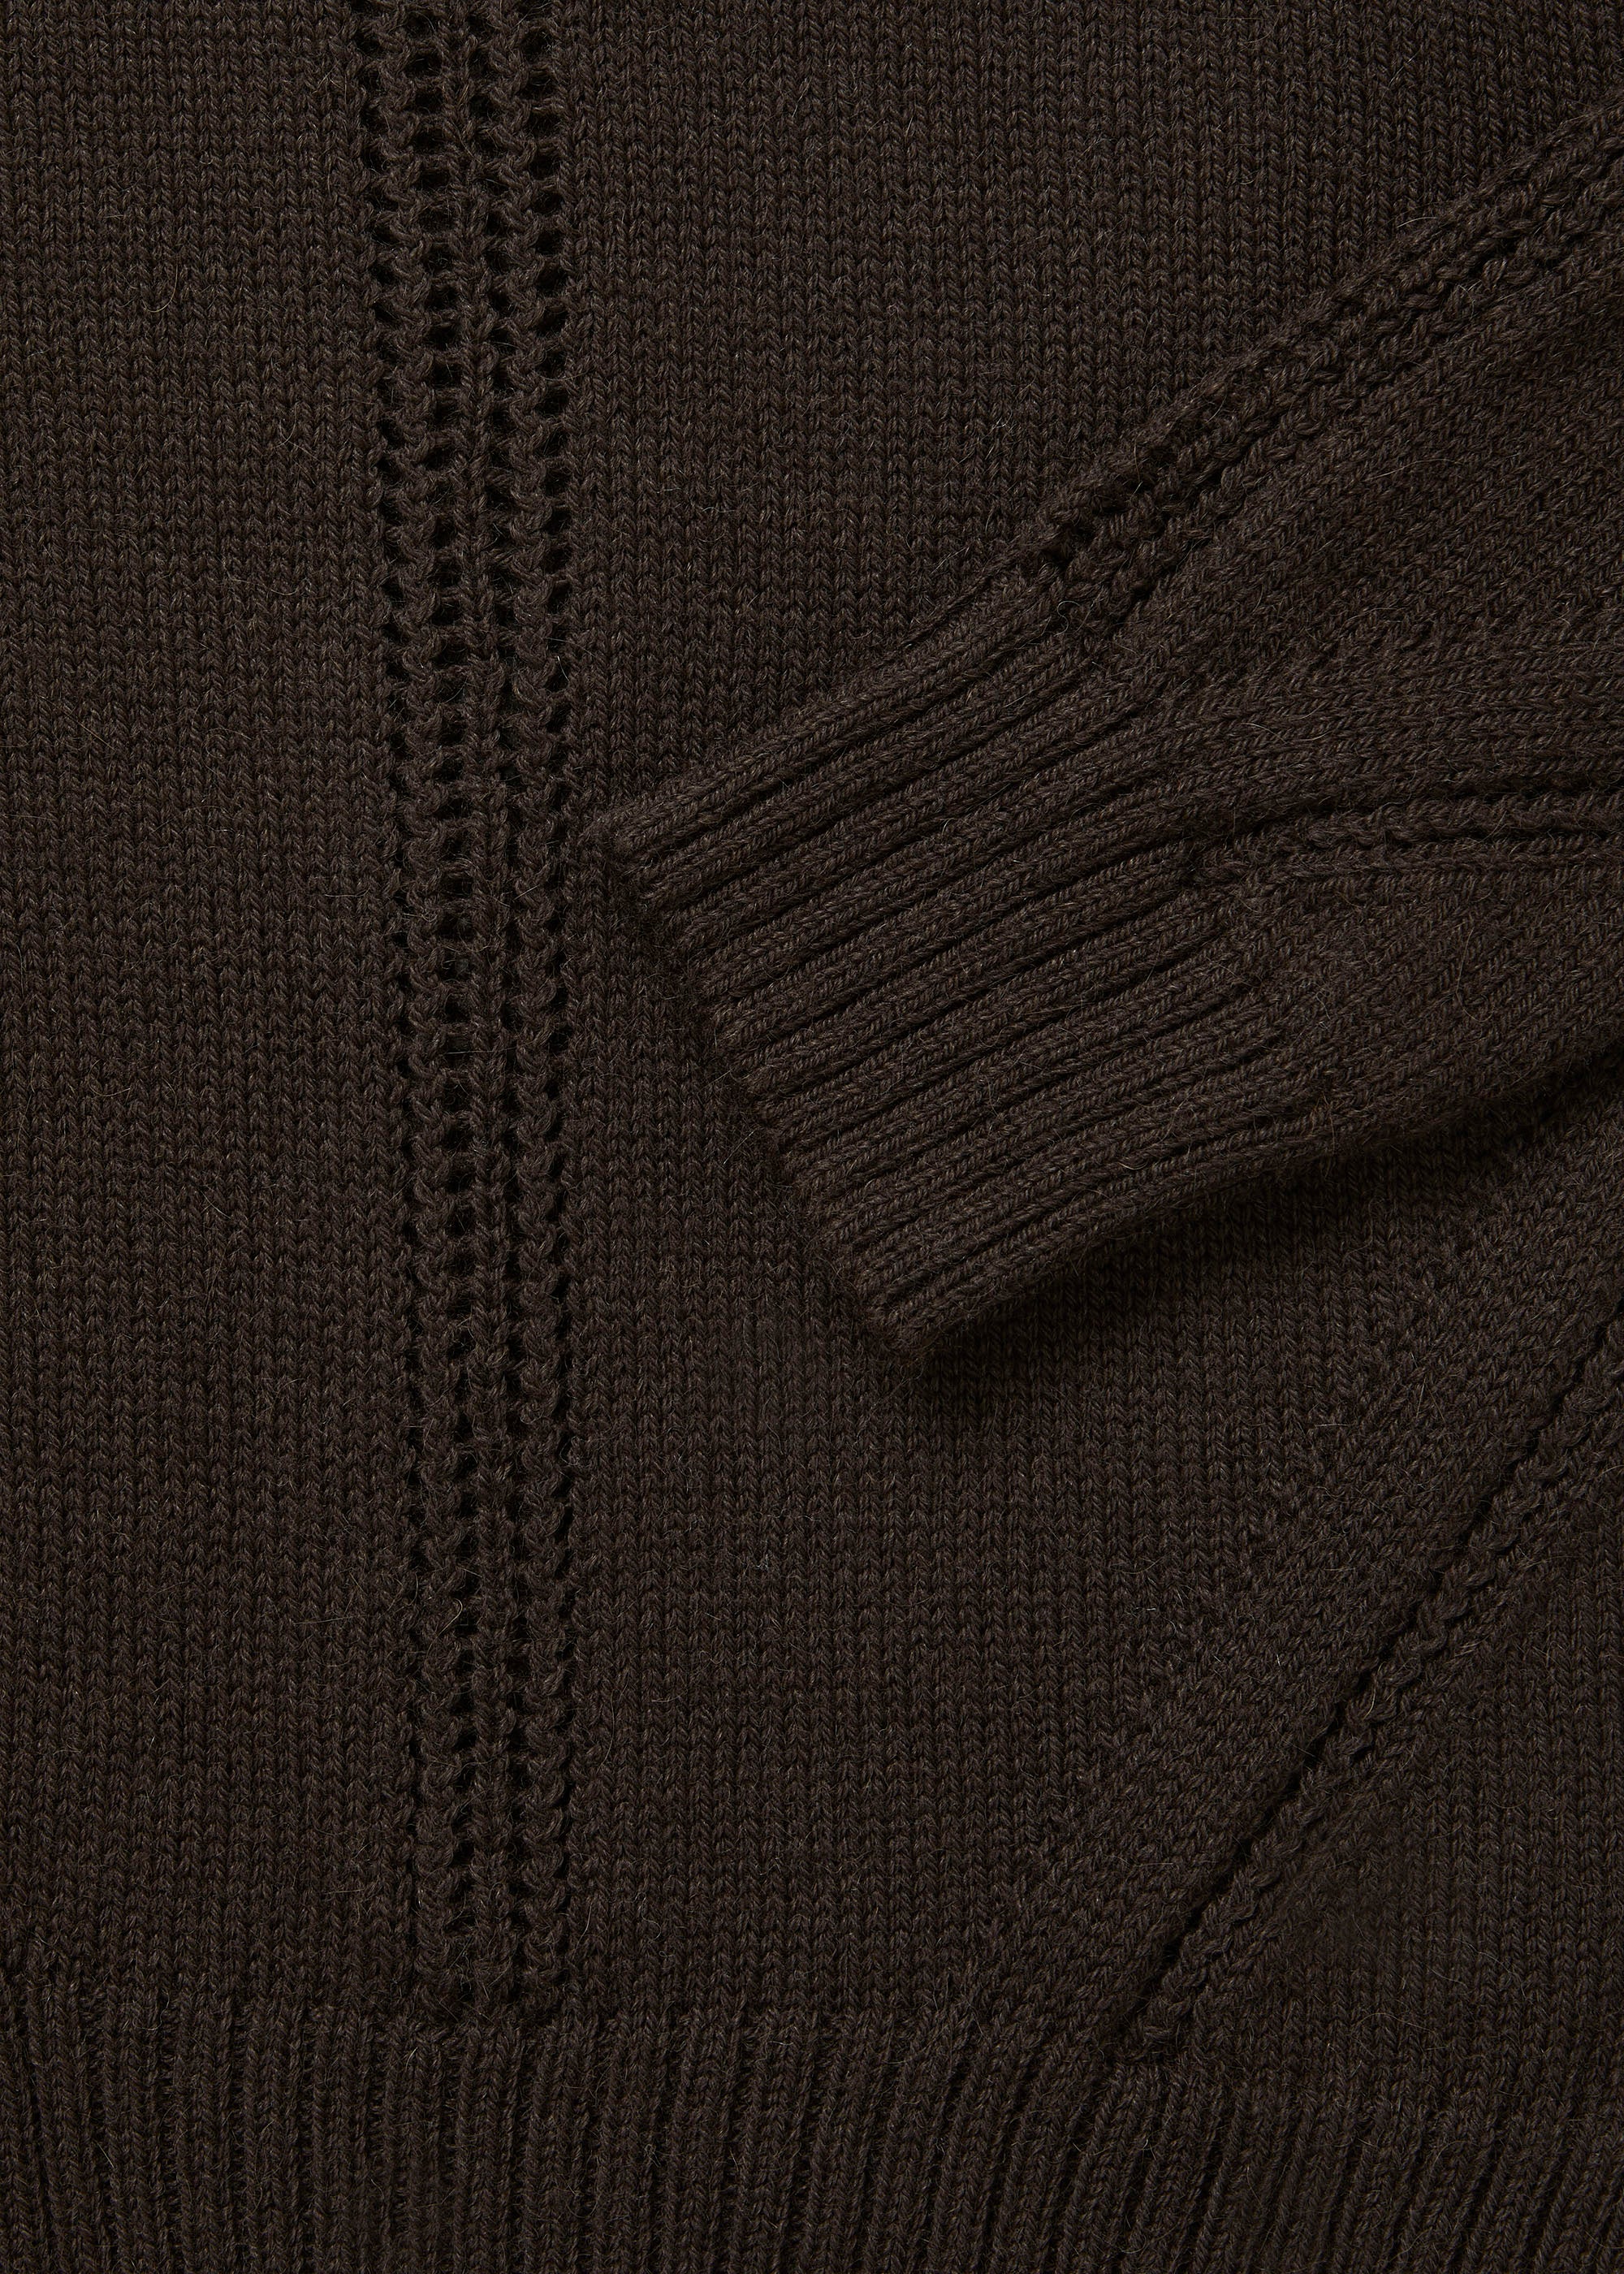 Clio llama wool sweater | Dark Chocolate